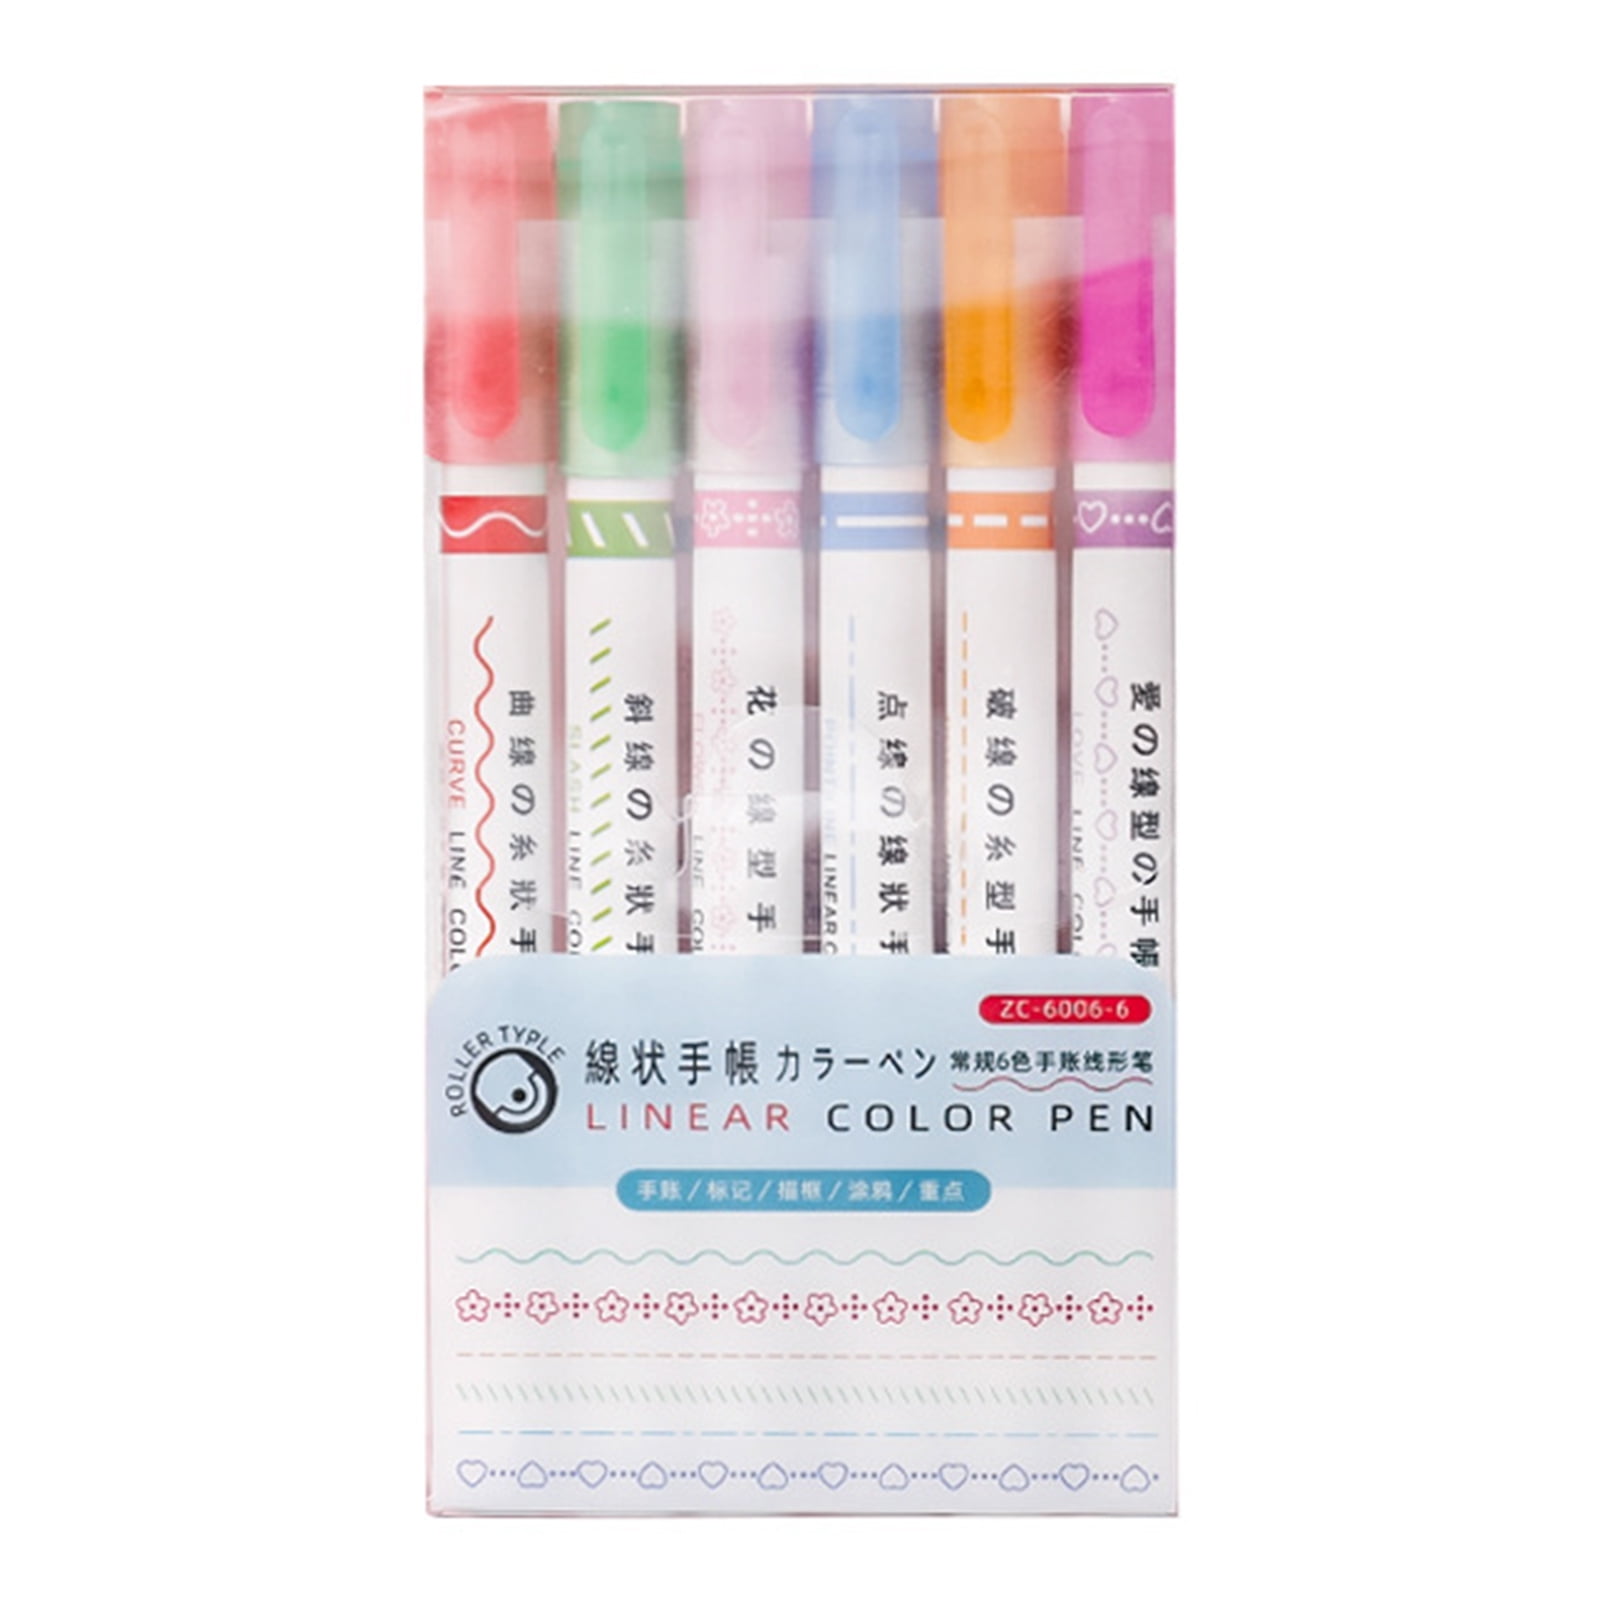 6pcs Light Color Dot Highlighter Pen Set Dual Side Fine Liner & Spot Marker  for Drawing Painting Office School Supplies F279